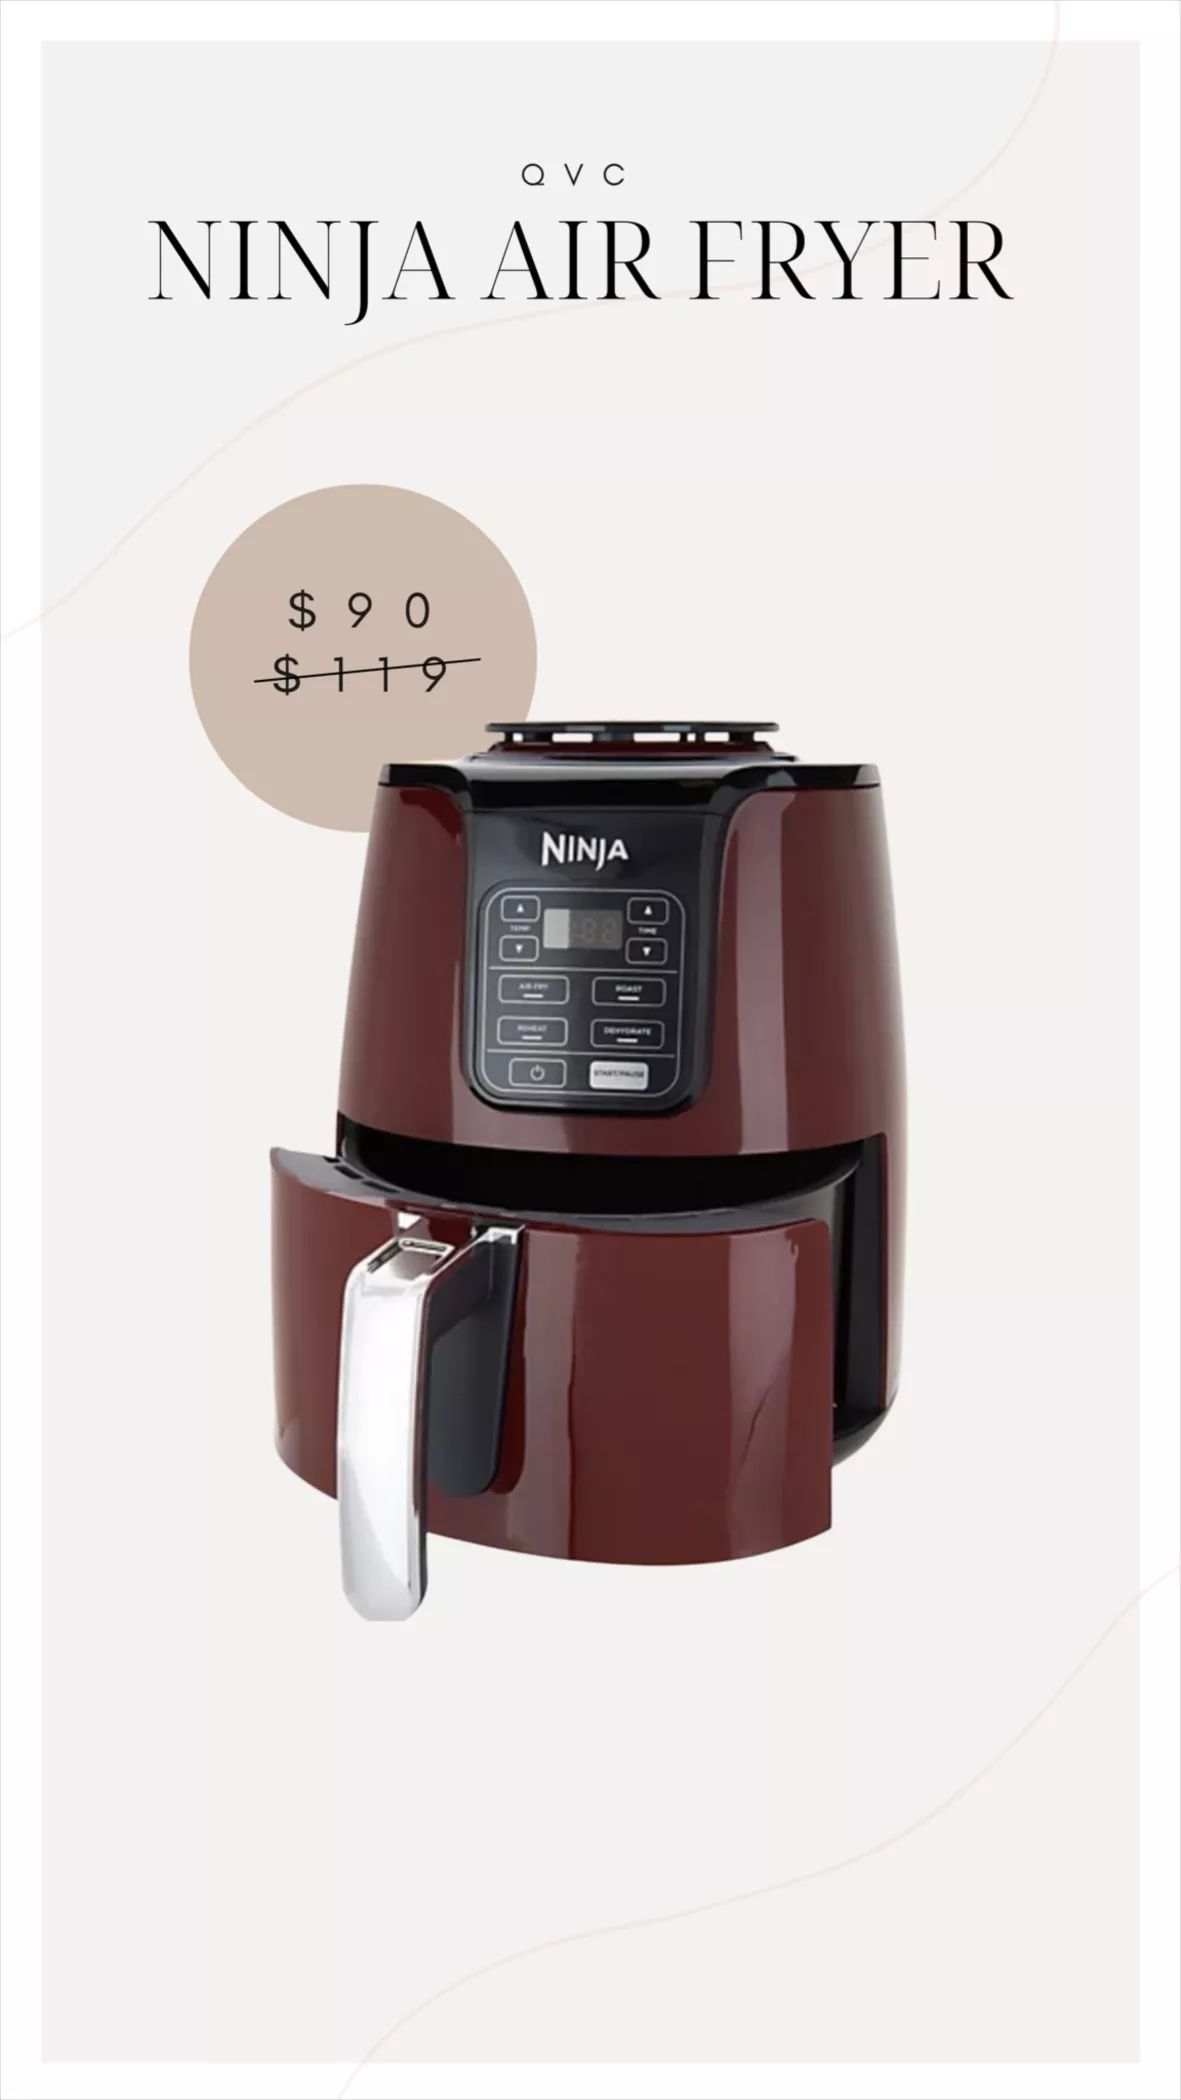 Ninja 4-Quart Air Fryer